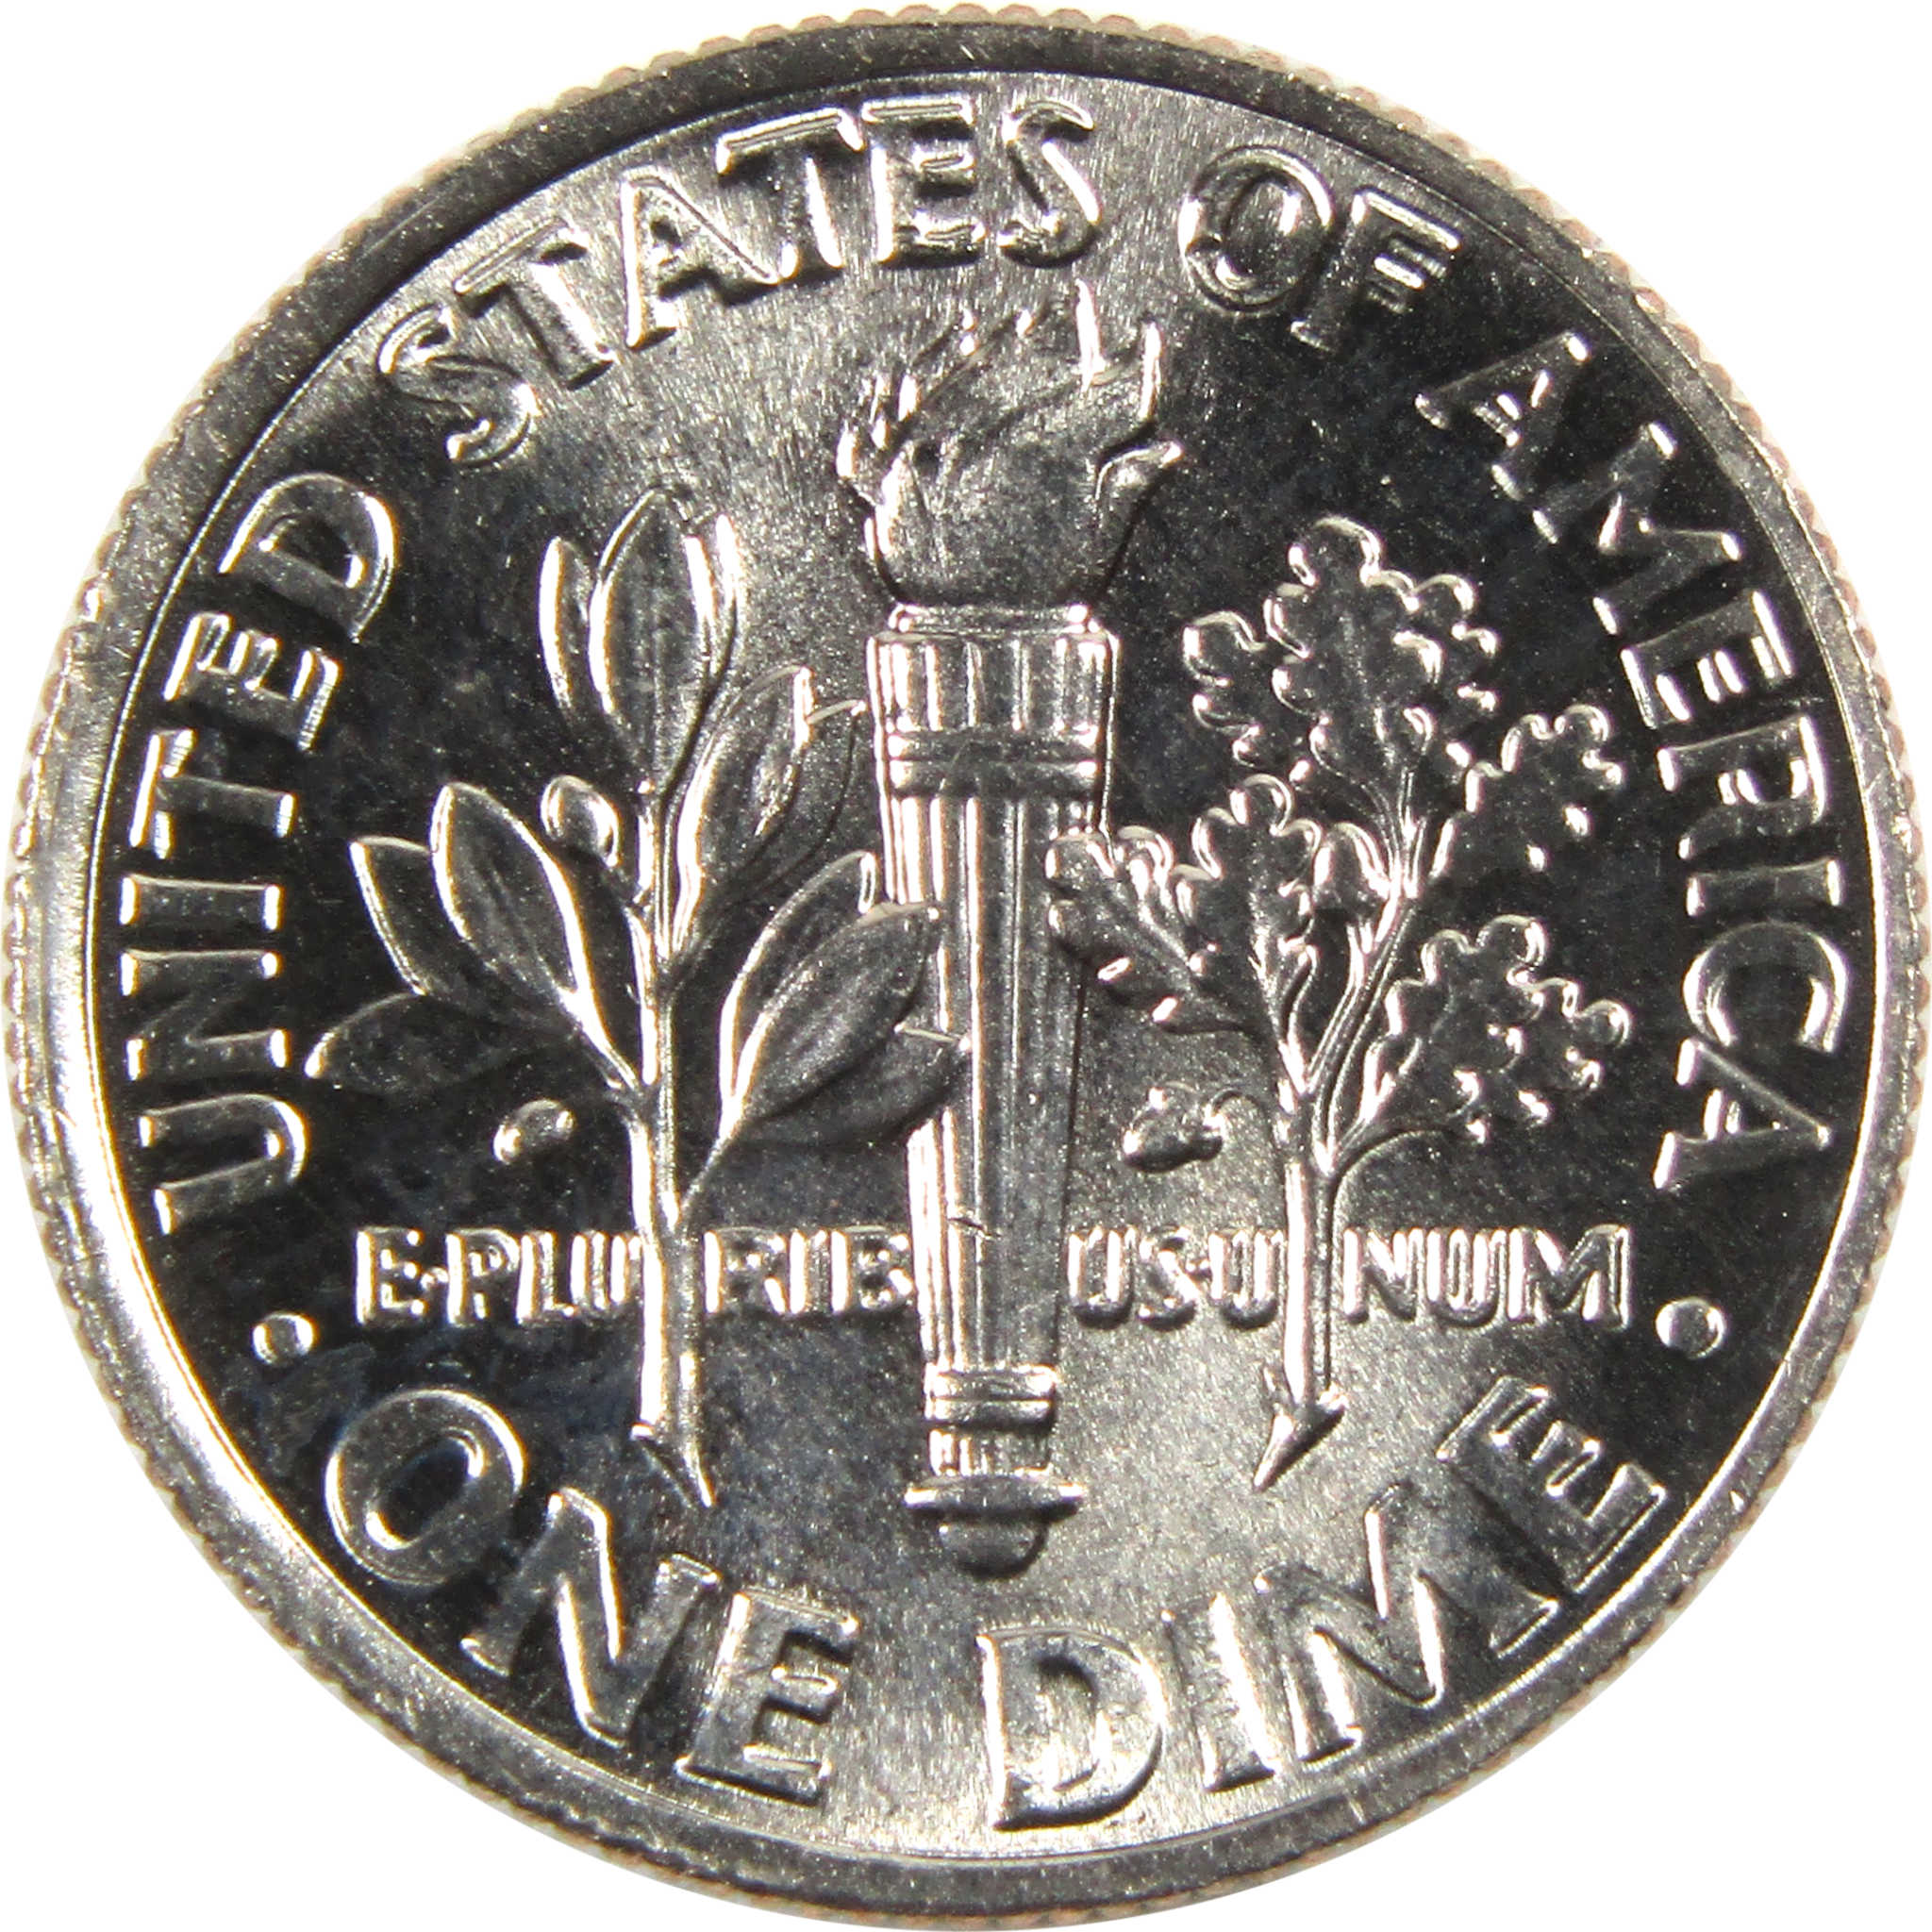 2021 D Roosevelt Dime BU Uncirculated Clad 10c Coin